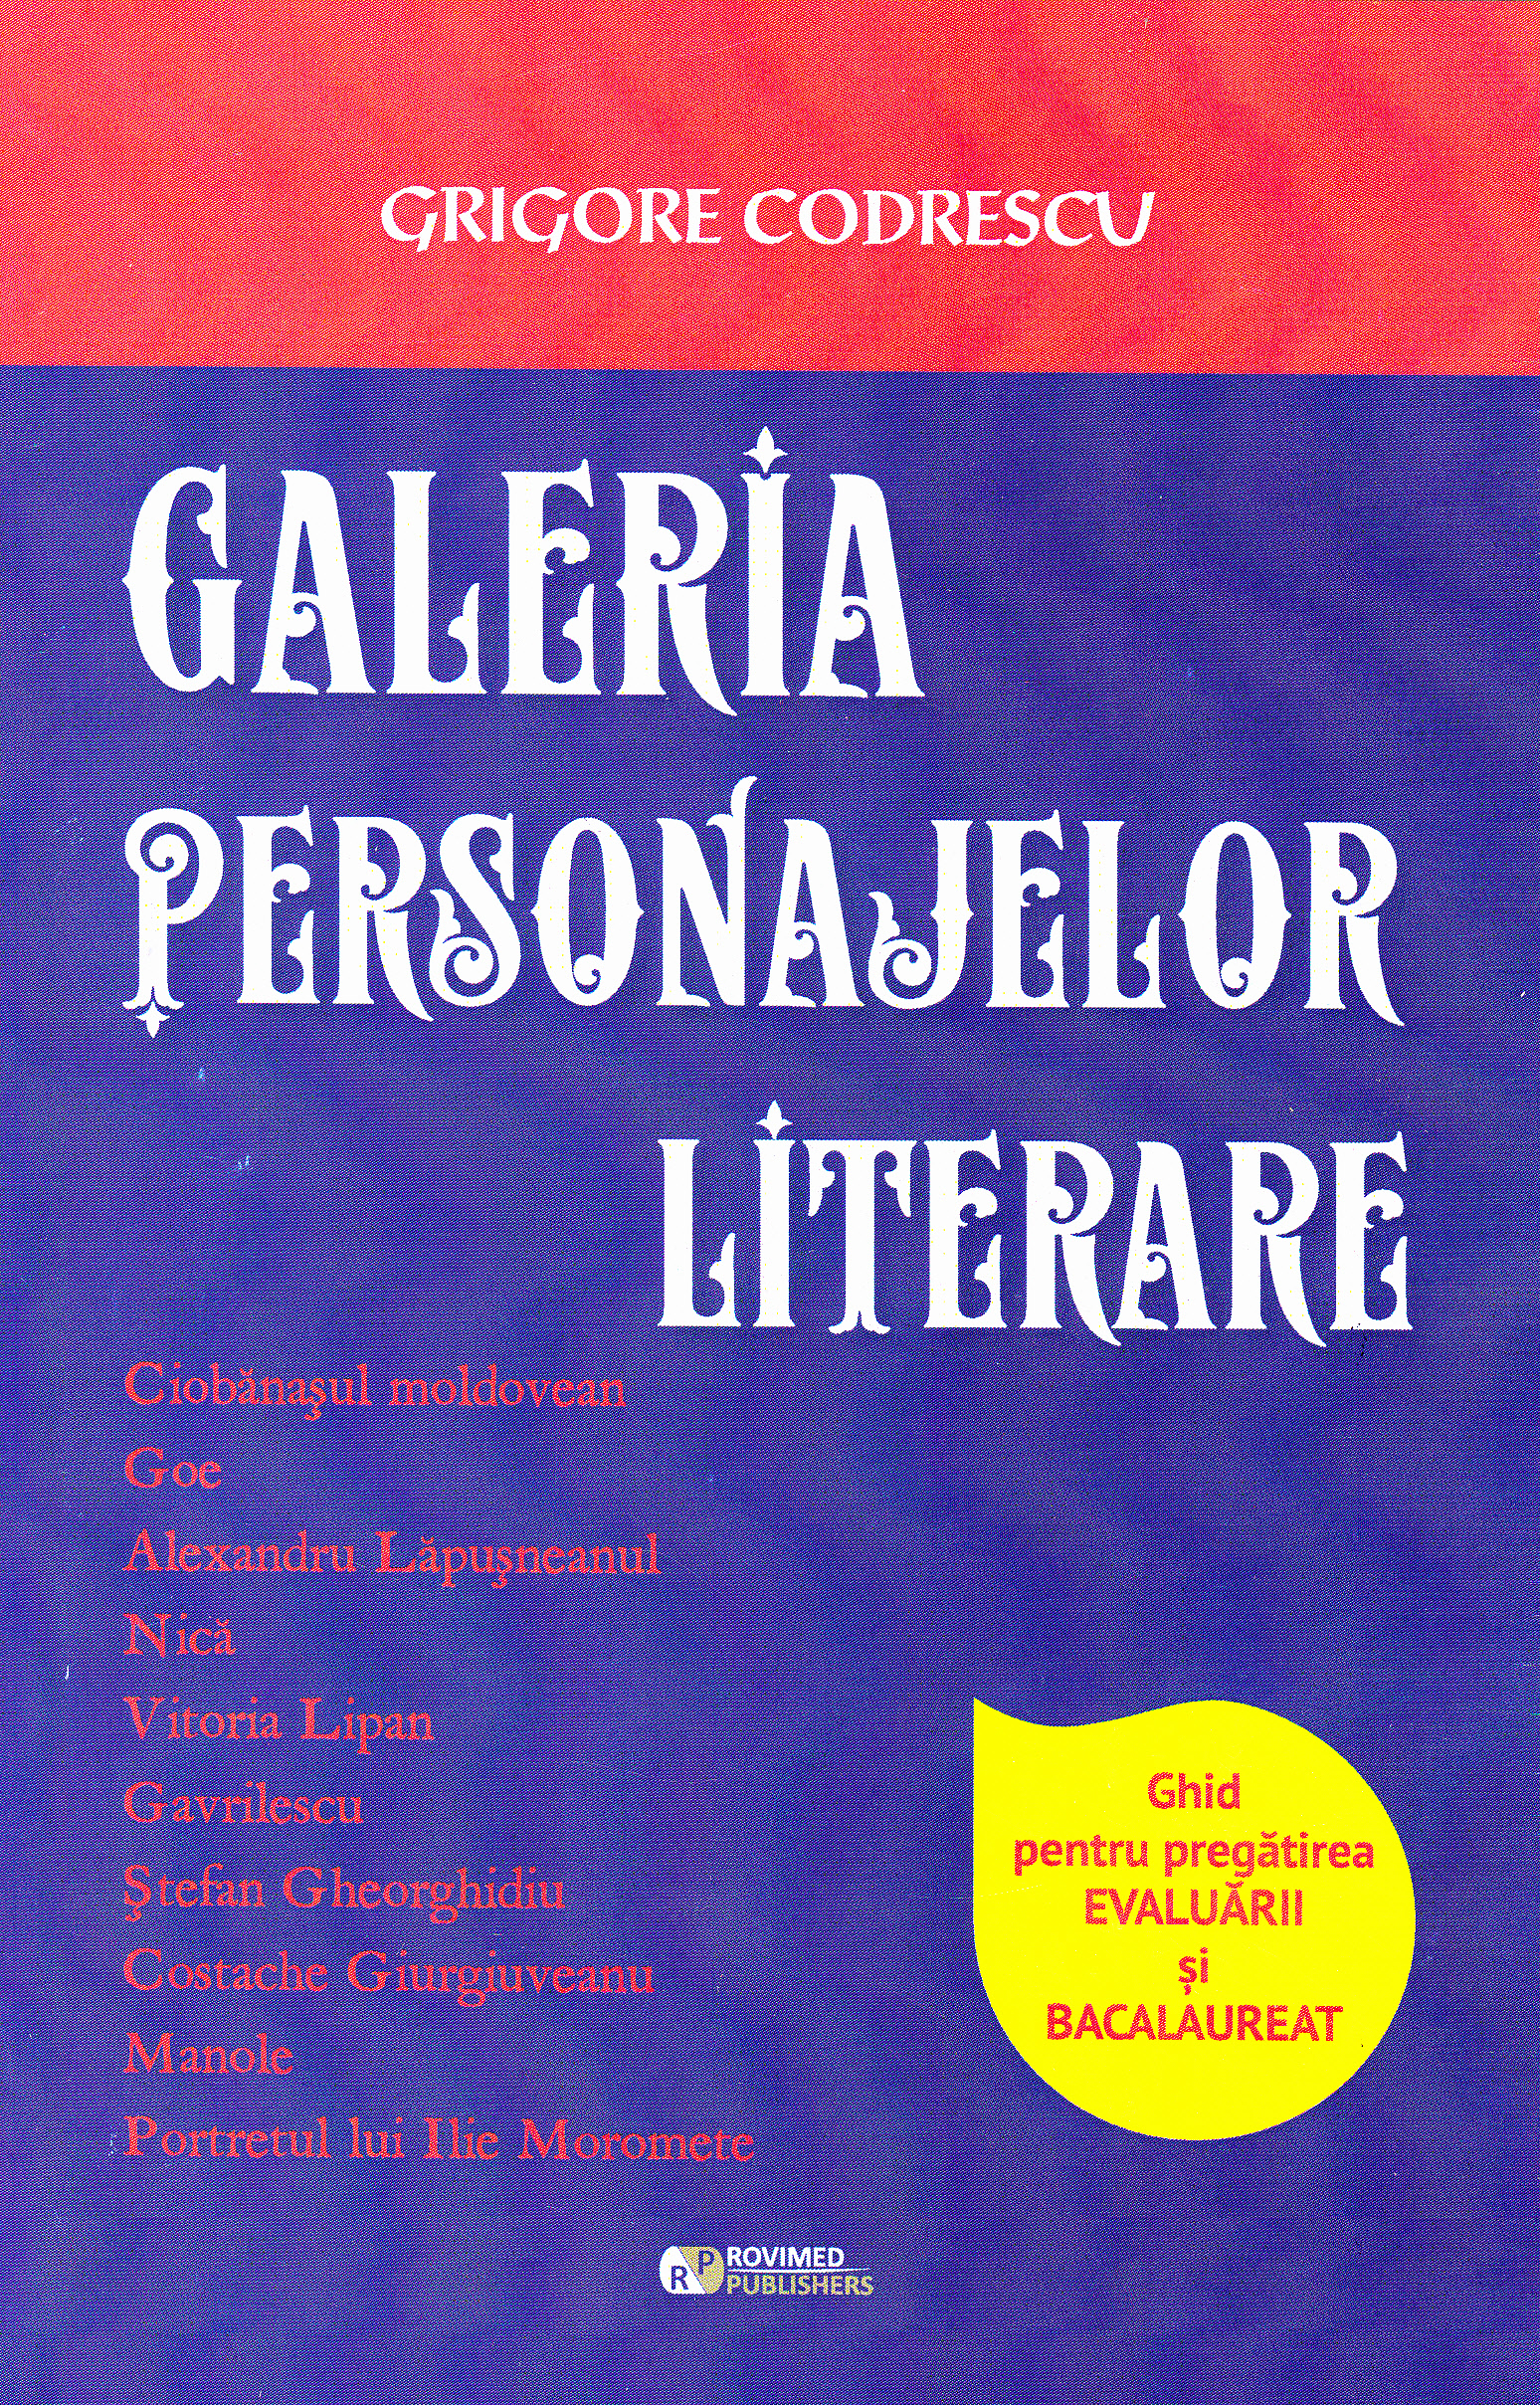 Galeria personajelor literare - Grigore Codrescu